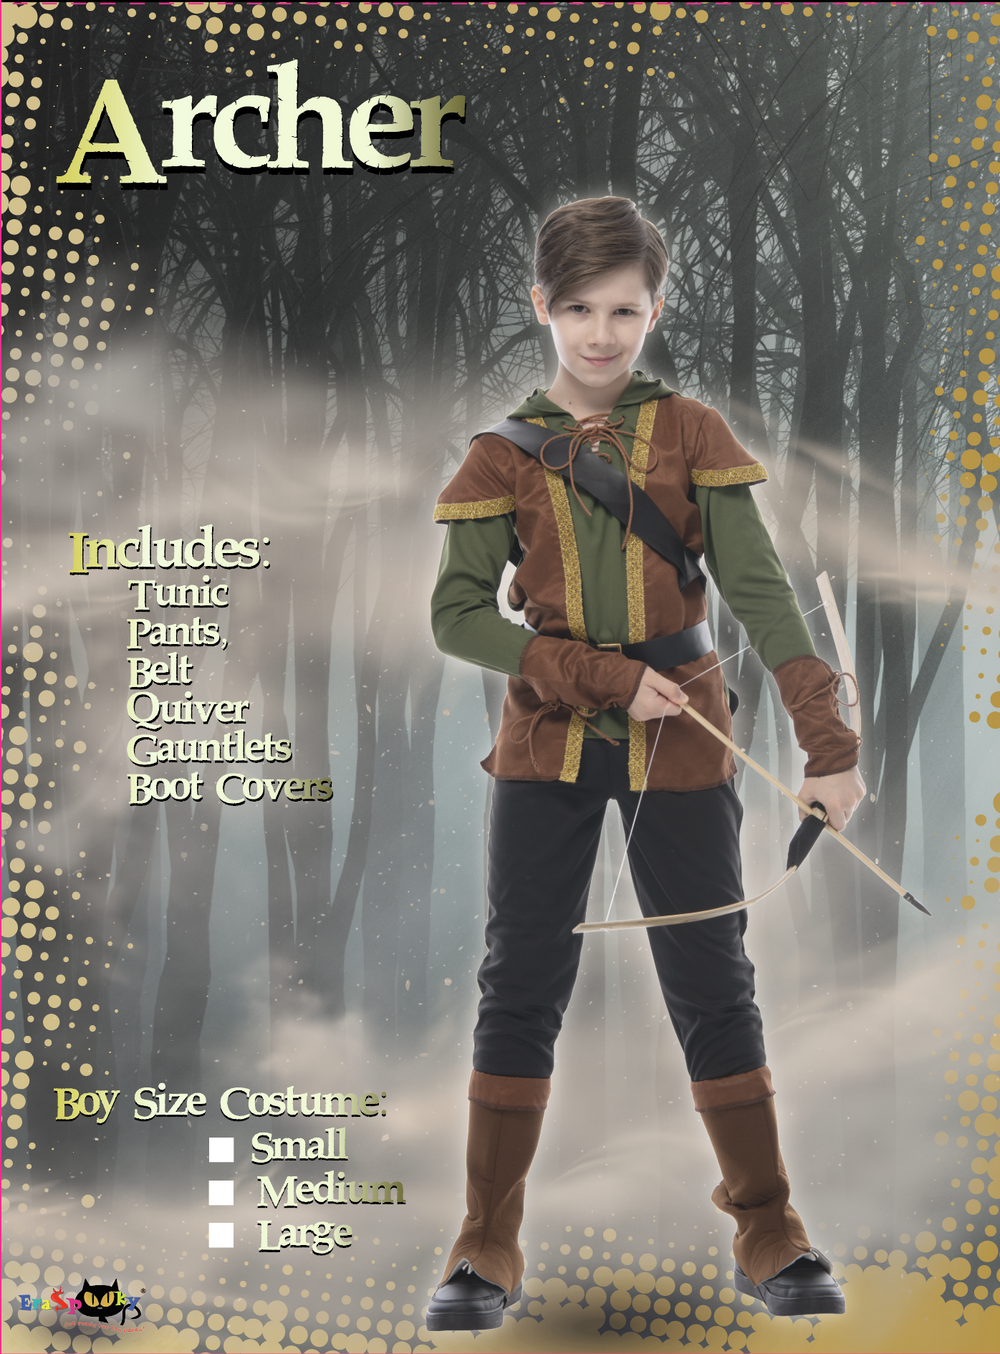 EraSpooky Boy's Robin Hood Disfraz de Halloween Medieval Archer Hunter Outfit